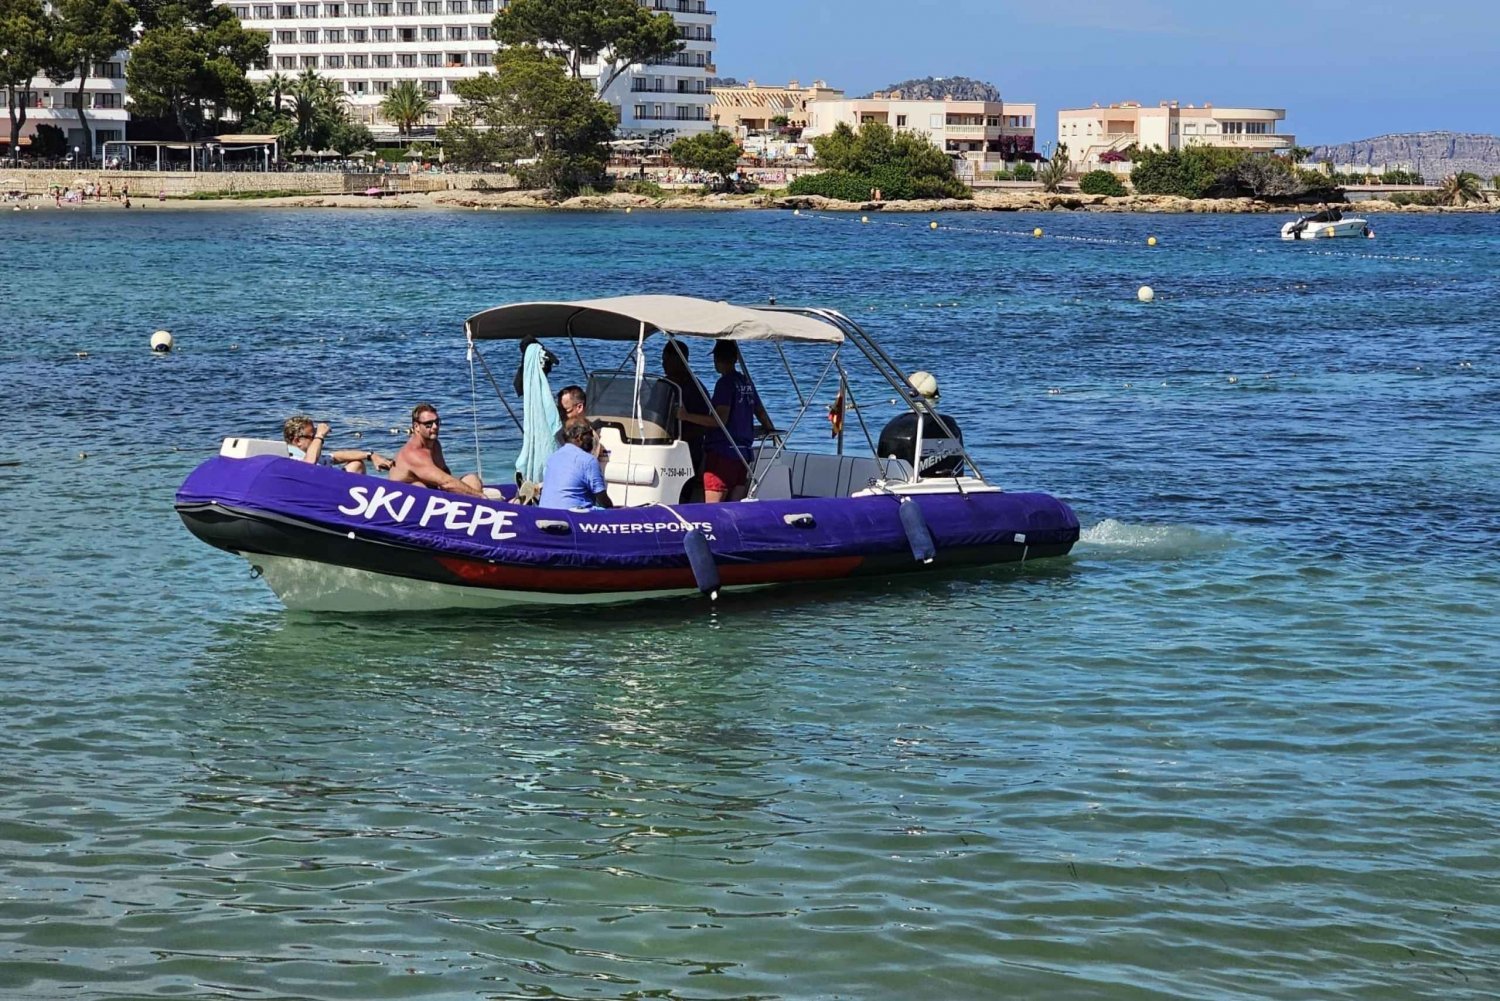 Santa Eulalia : Excursion en bateau au nord d'Ibiza